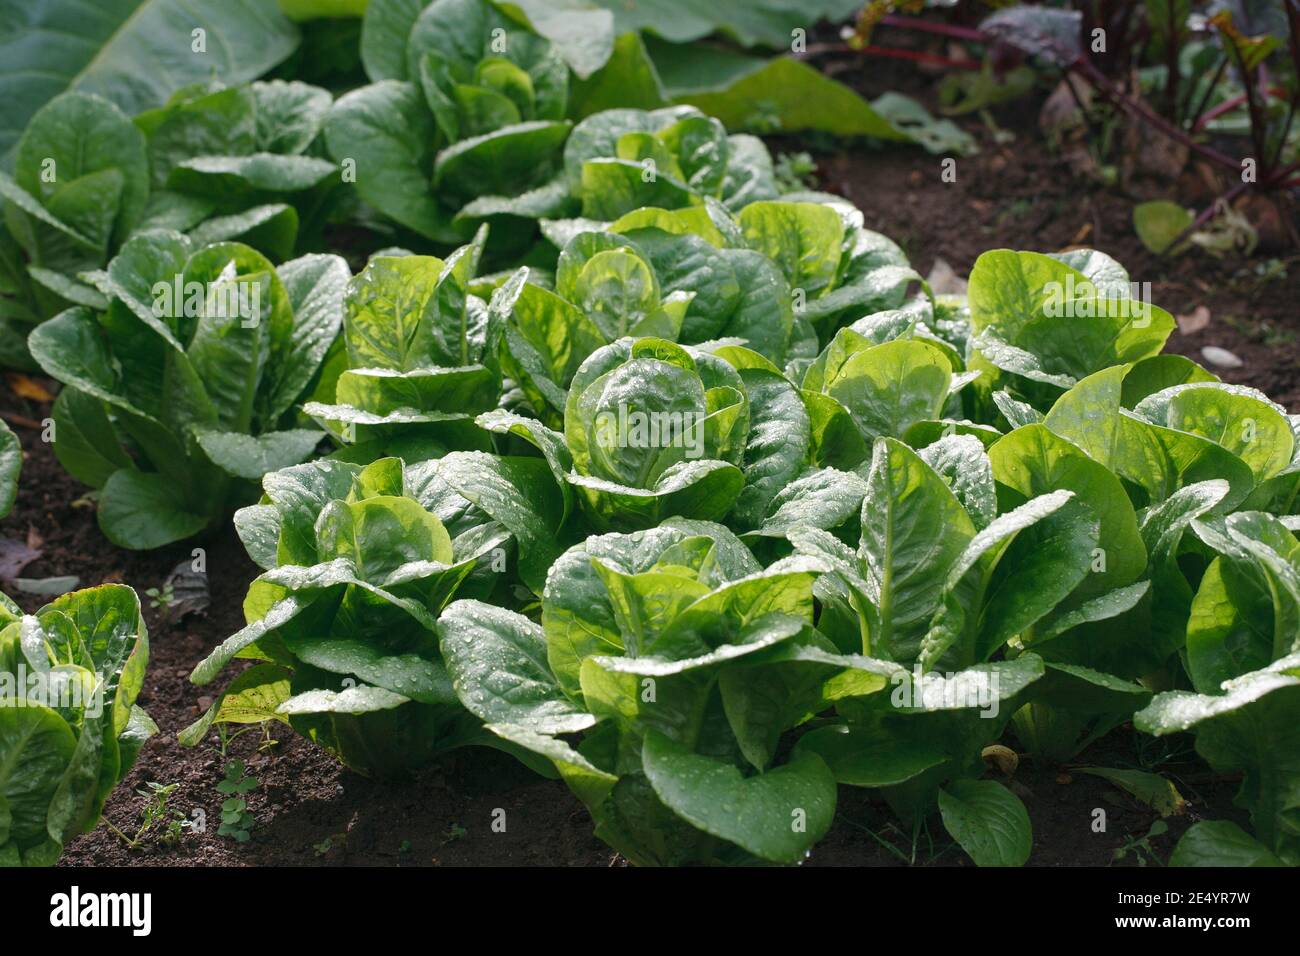 Lactuca sativa. Lettuce growing in a vegetable garden. Stock Photo